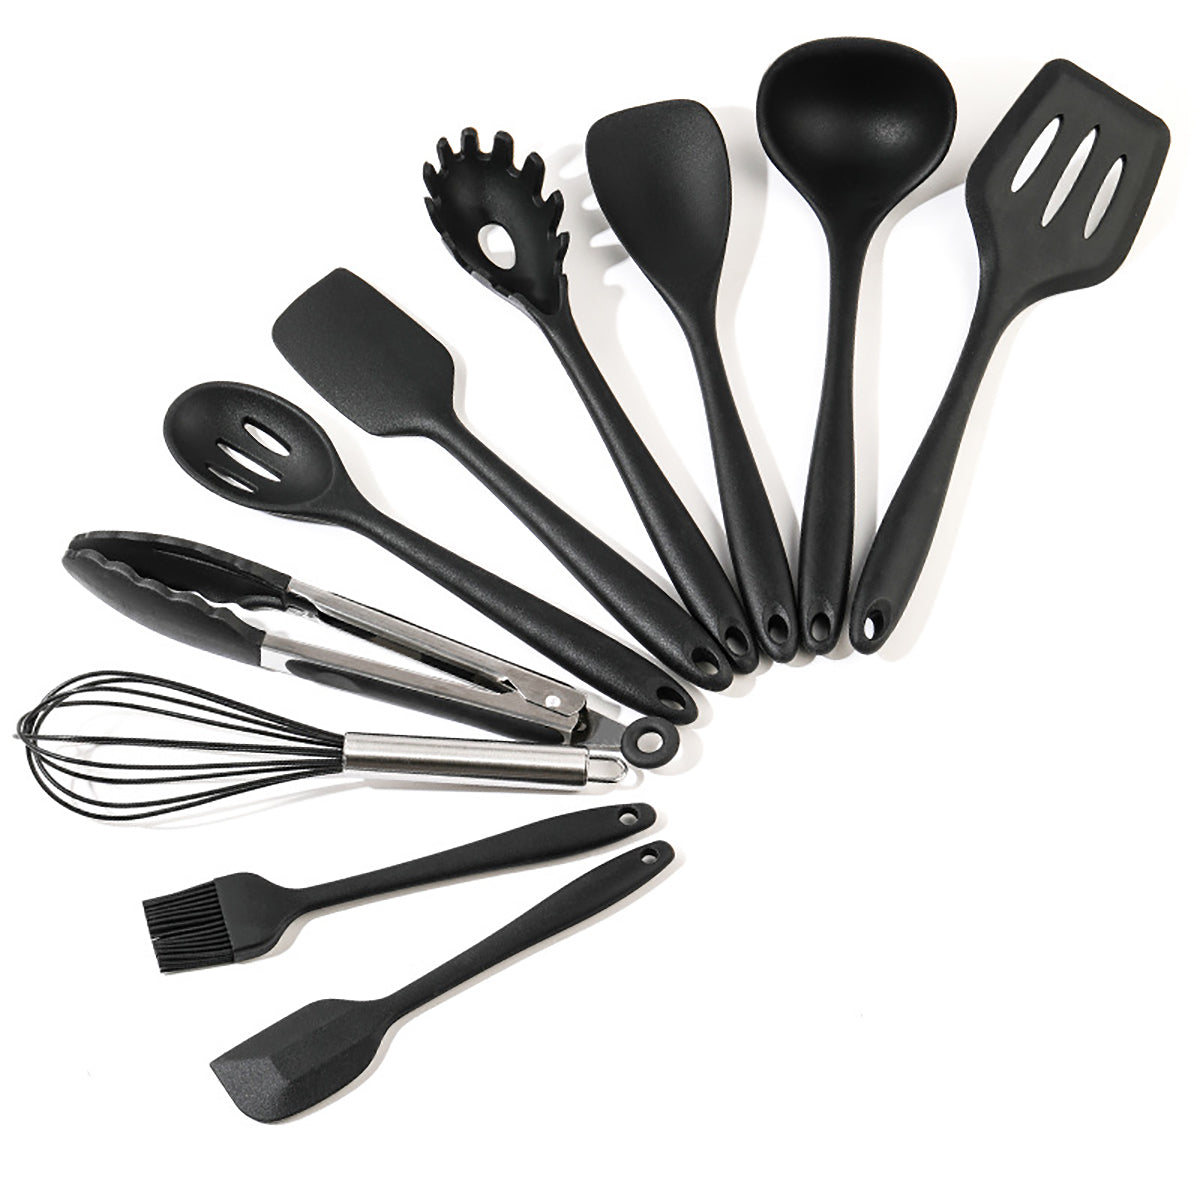 10pcs Utensils Spatula Shovel Soup Spoon Heat-resistant Design Silicone Kitchen Cooking Tools Set